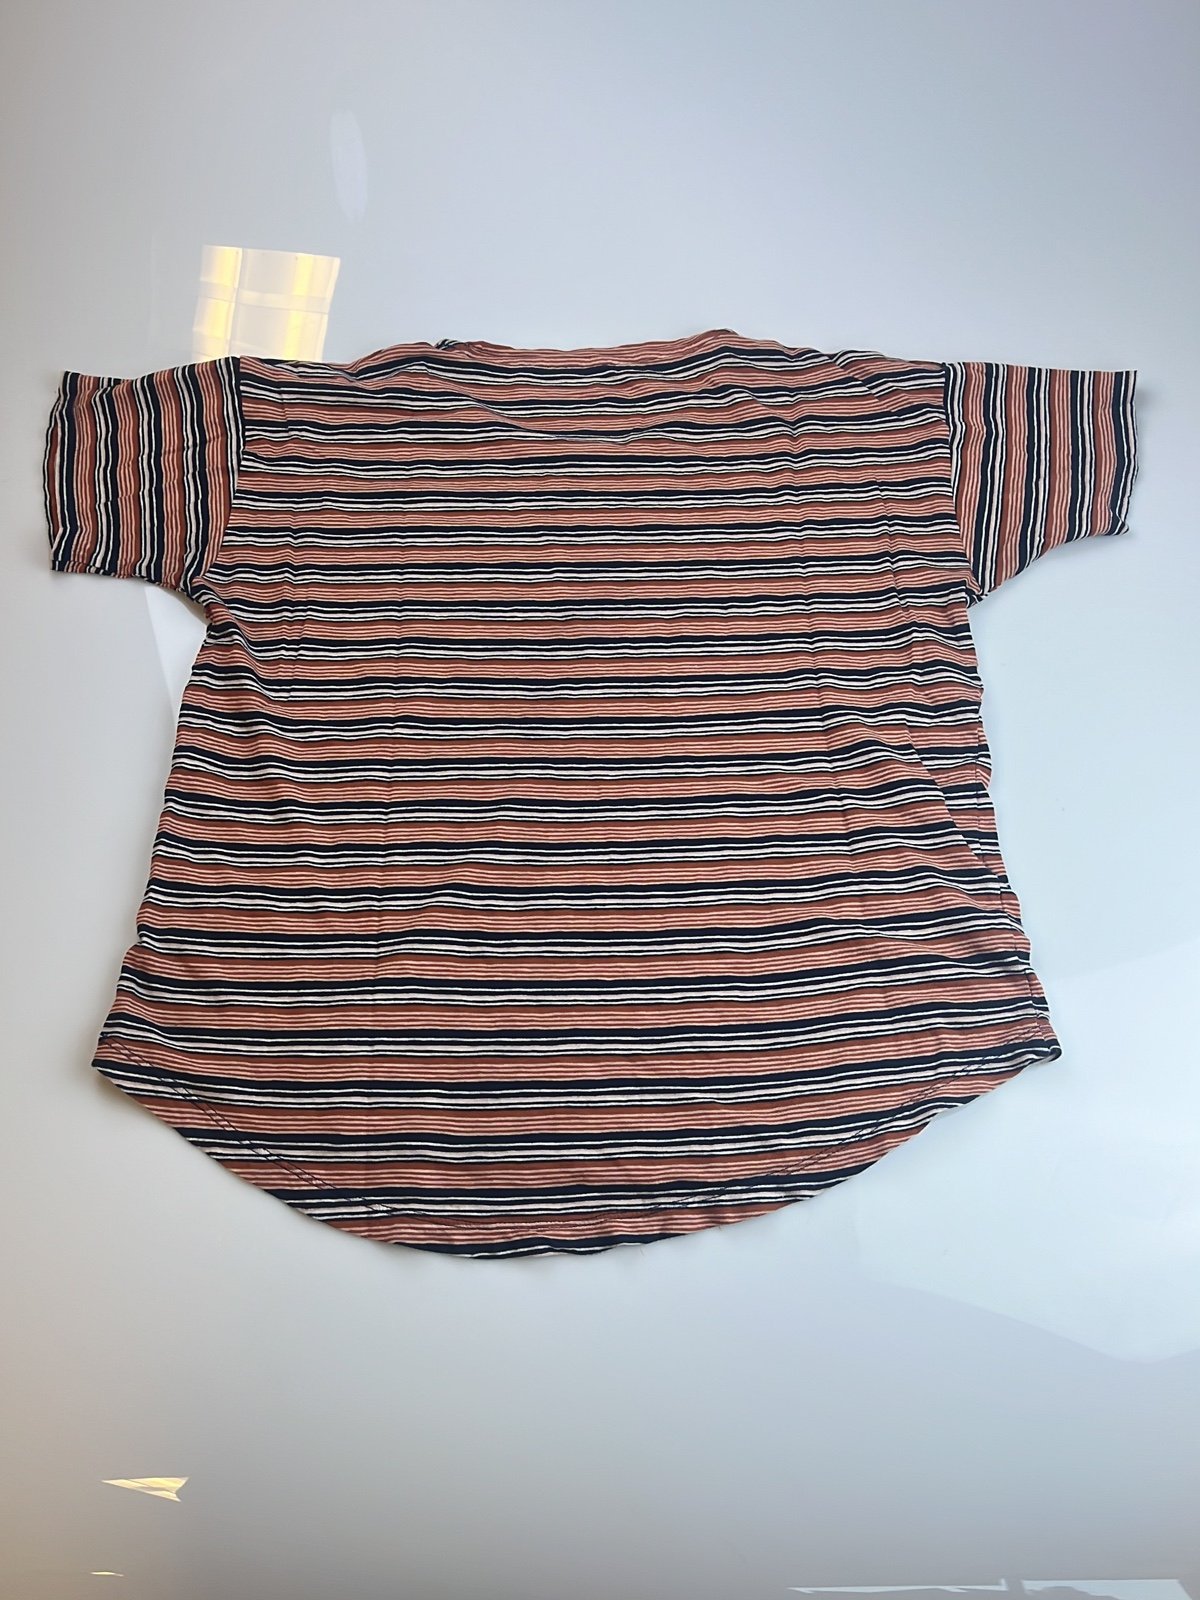 Fashion Madewell Striped Shirt S25-34 gRLfRyFha US Outlet